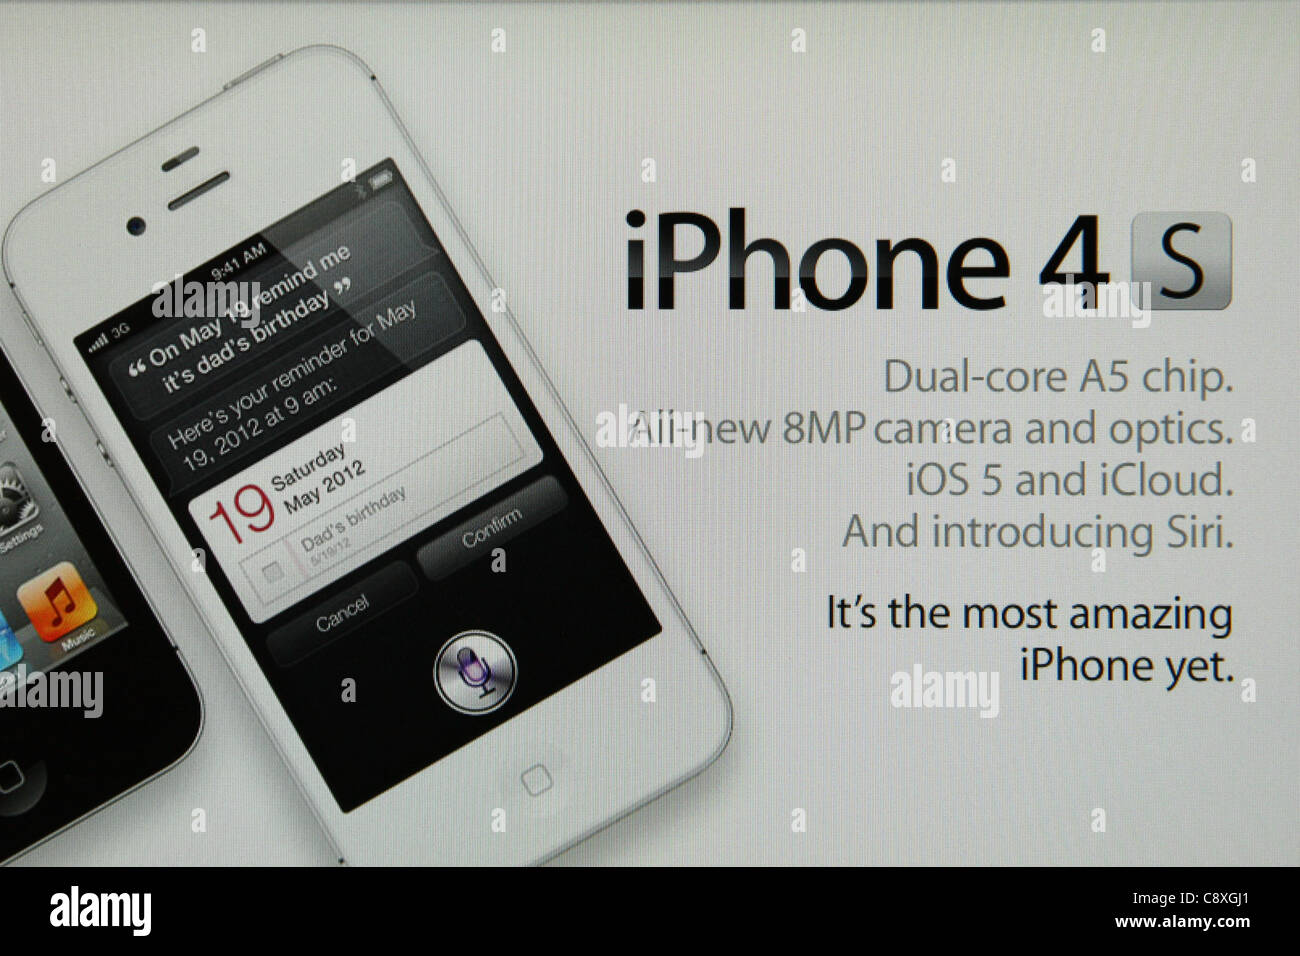 apple iphone4s advertisement Stock Photo - Alamy